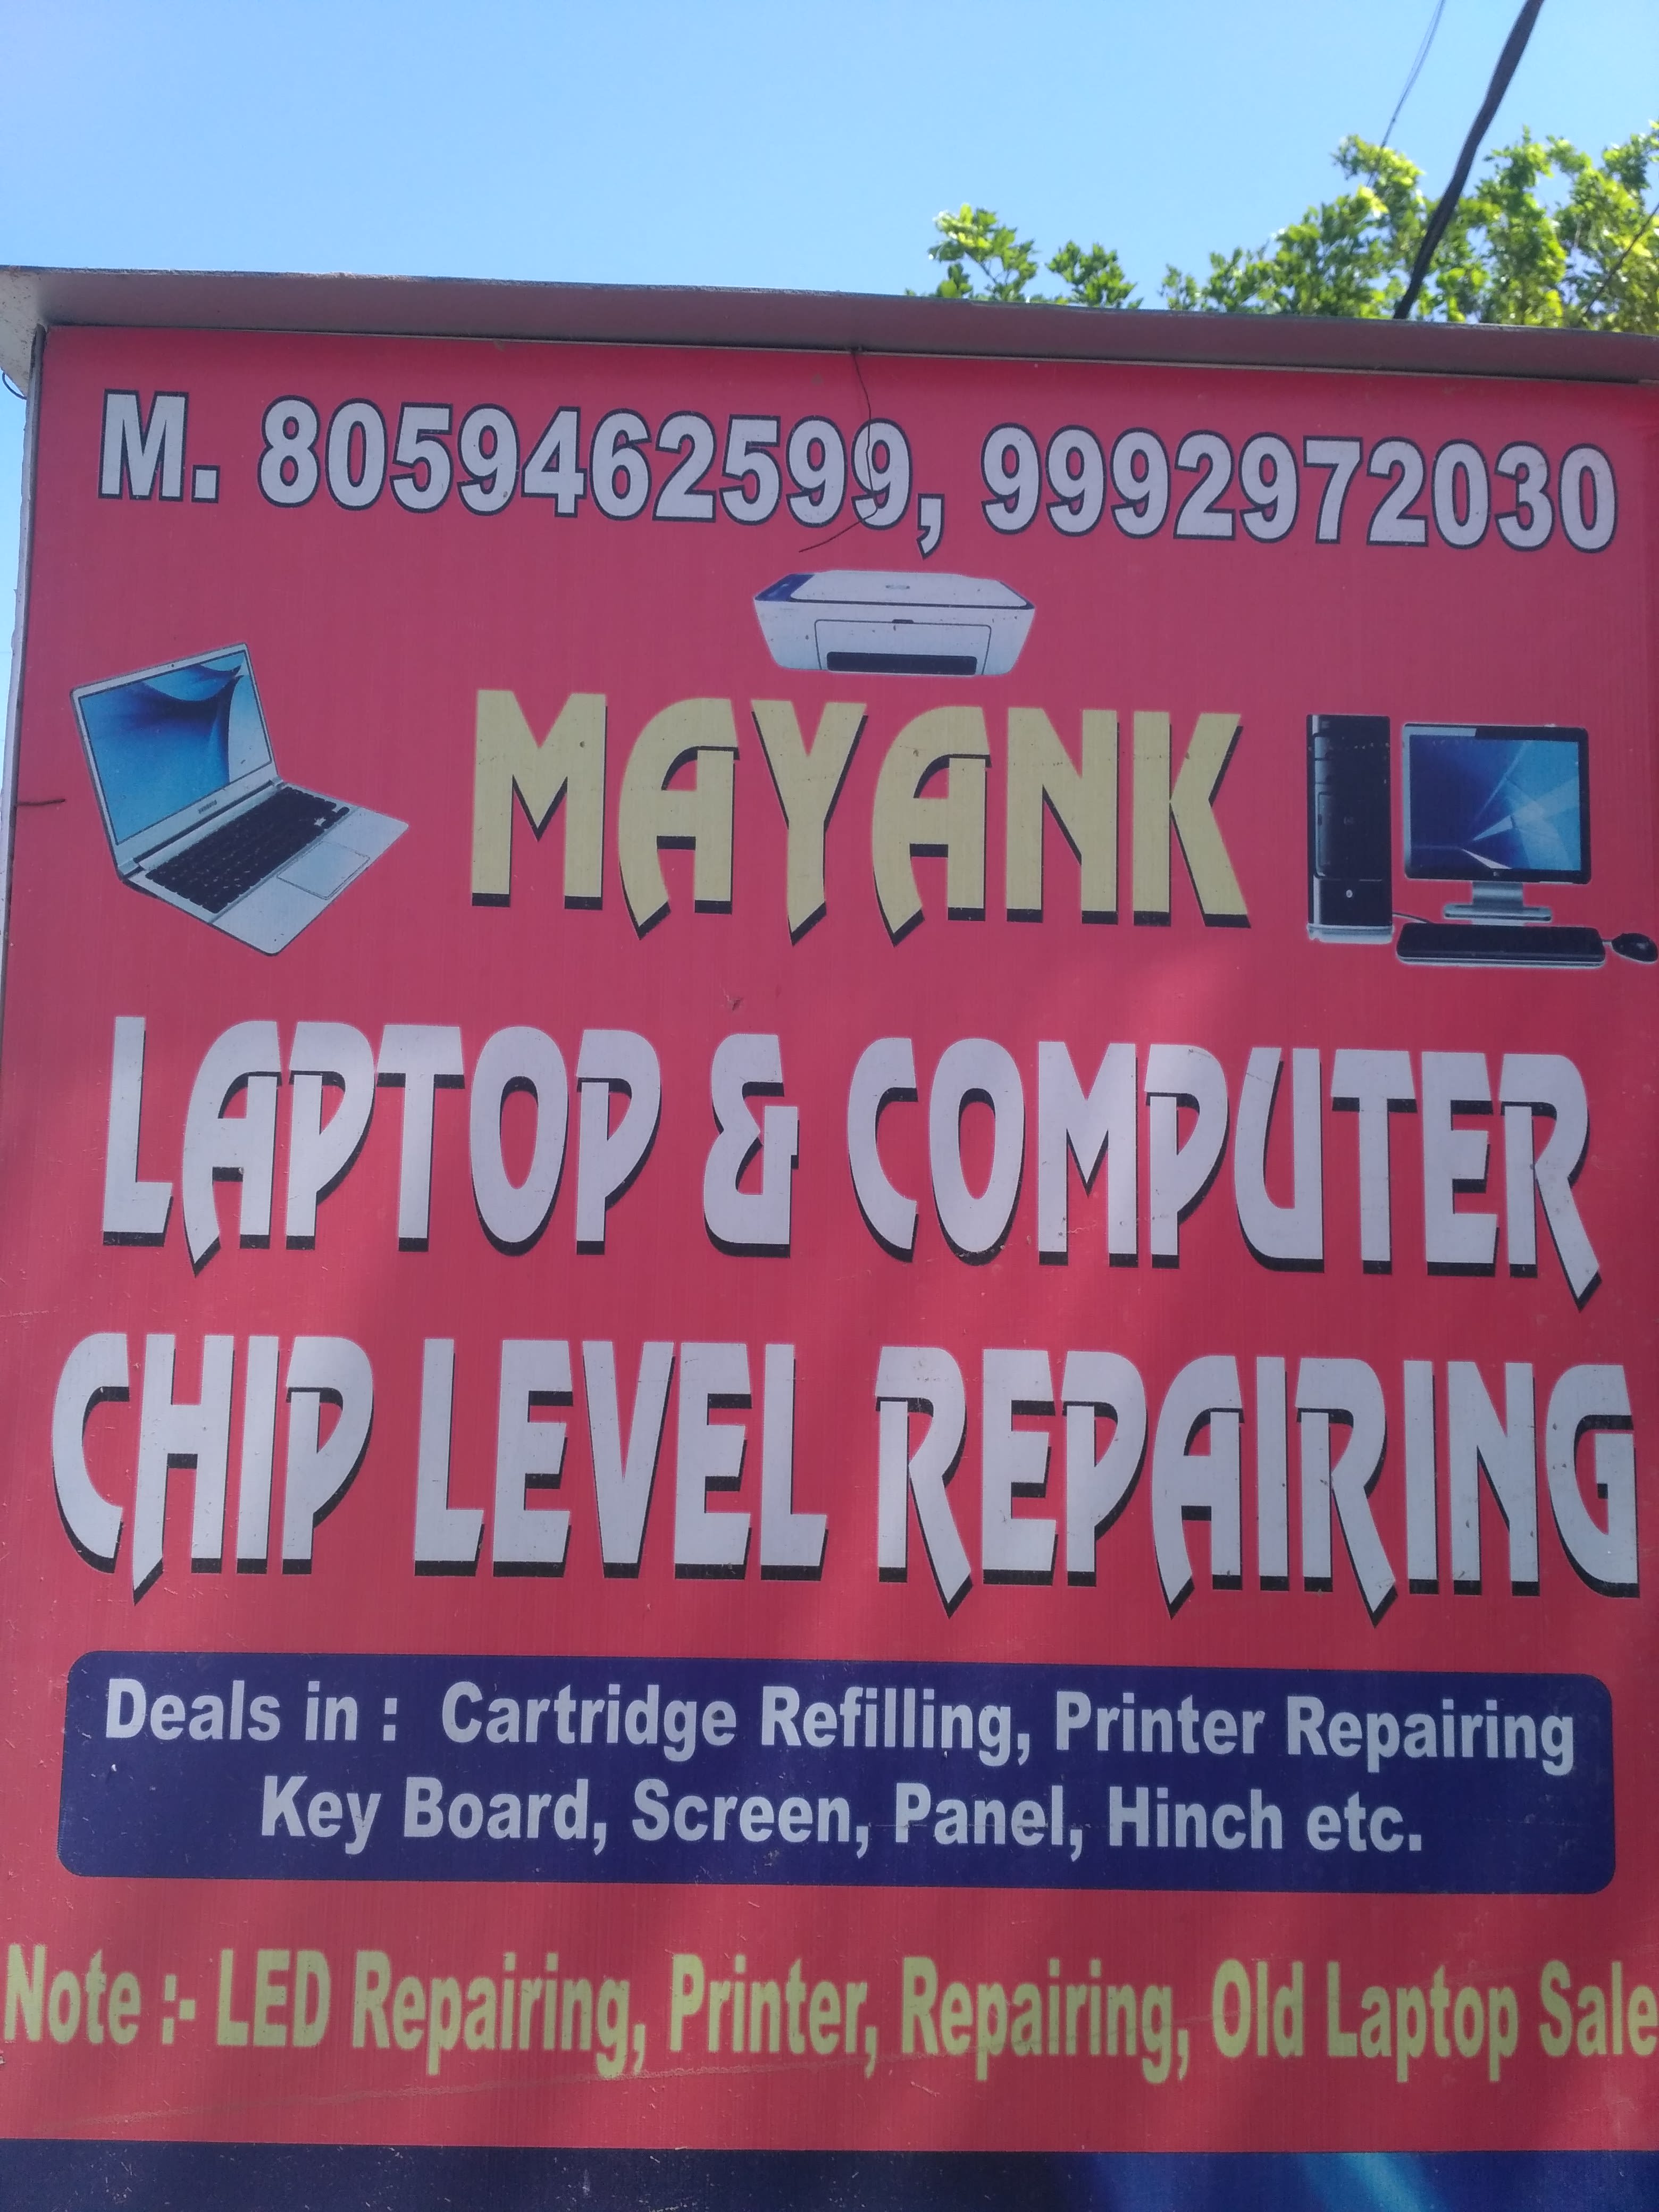 Mayank laptop & computer repairing